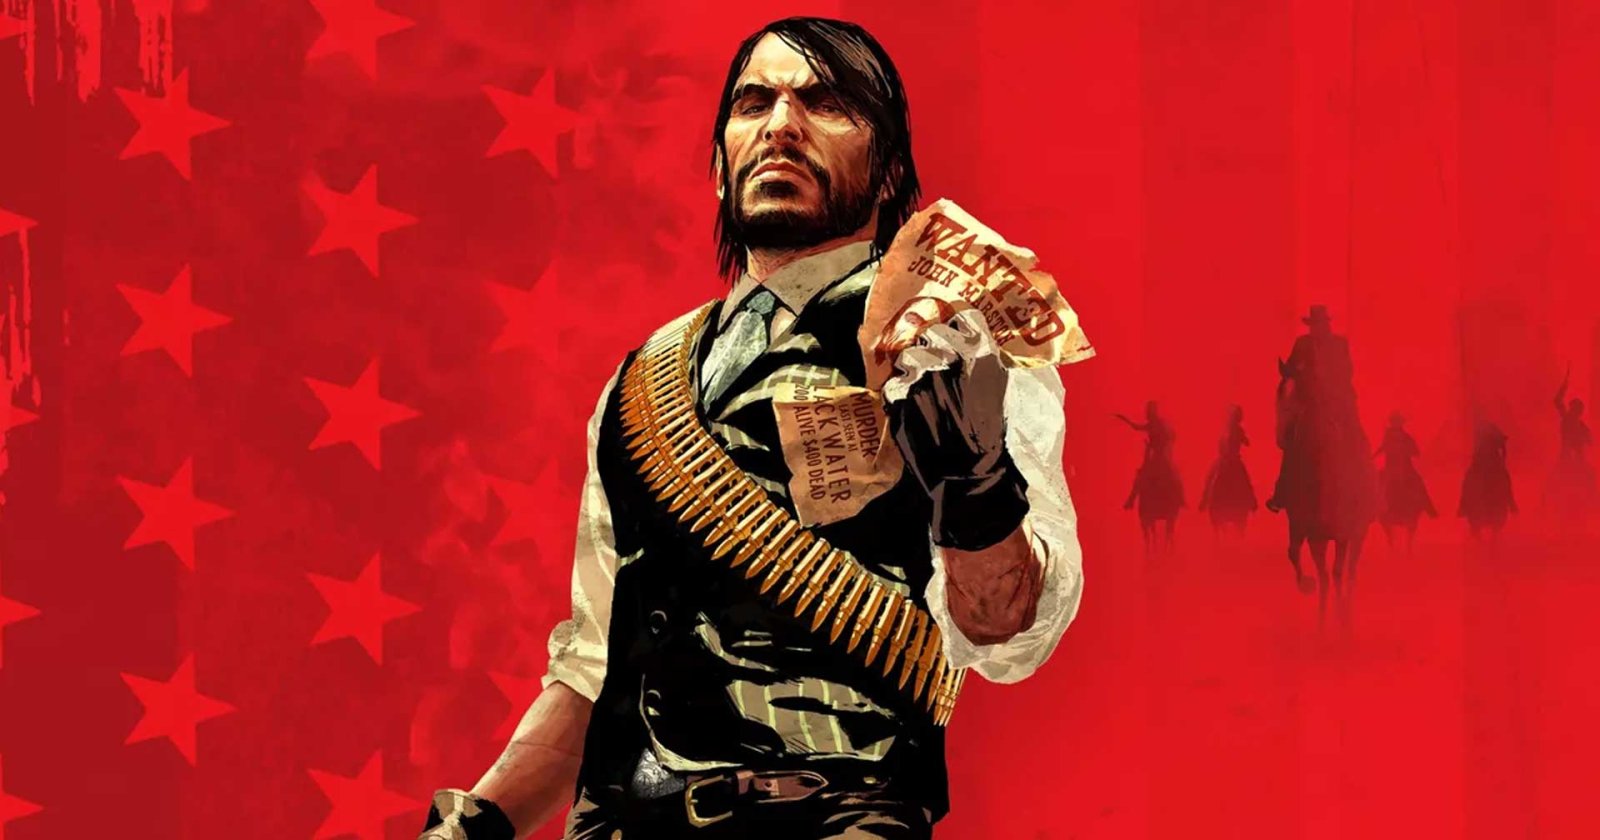 Take-Two เผย Red Dead Redemption มีราคาที่เหมาะสมในเชิงพาณิชย์ หลังแฟนเกมไม่พอใจ